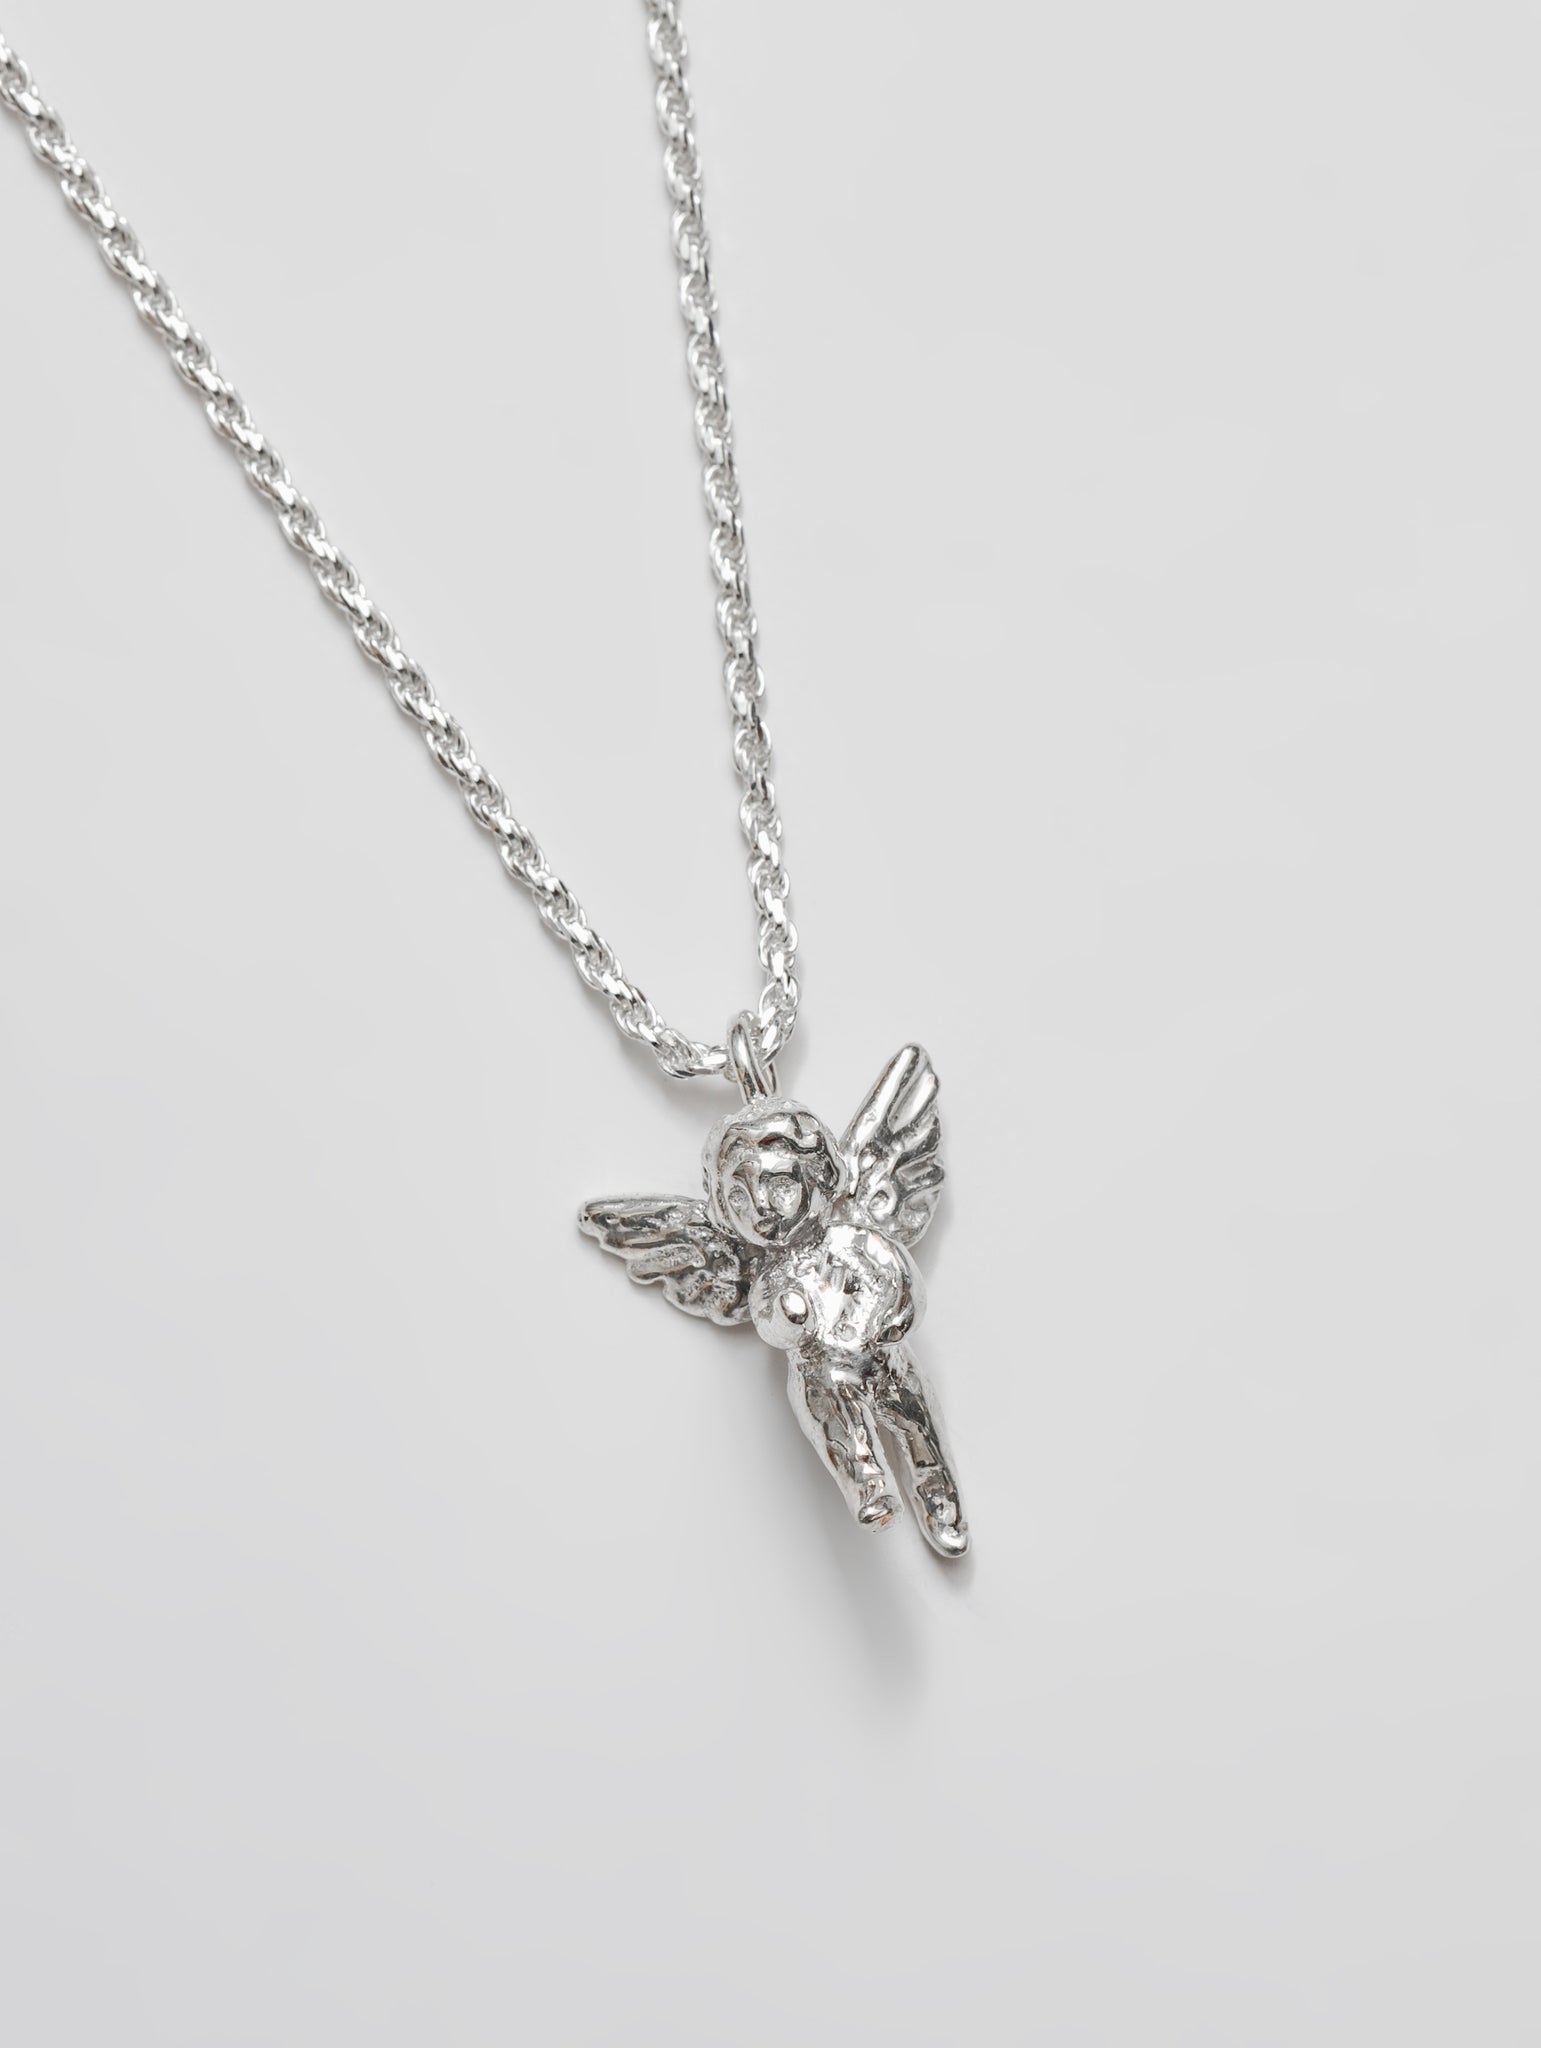 Cherub Necklace in Sterling Silver